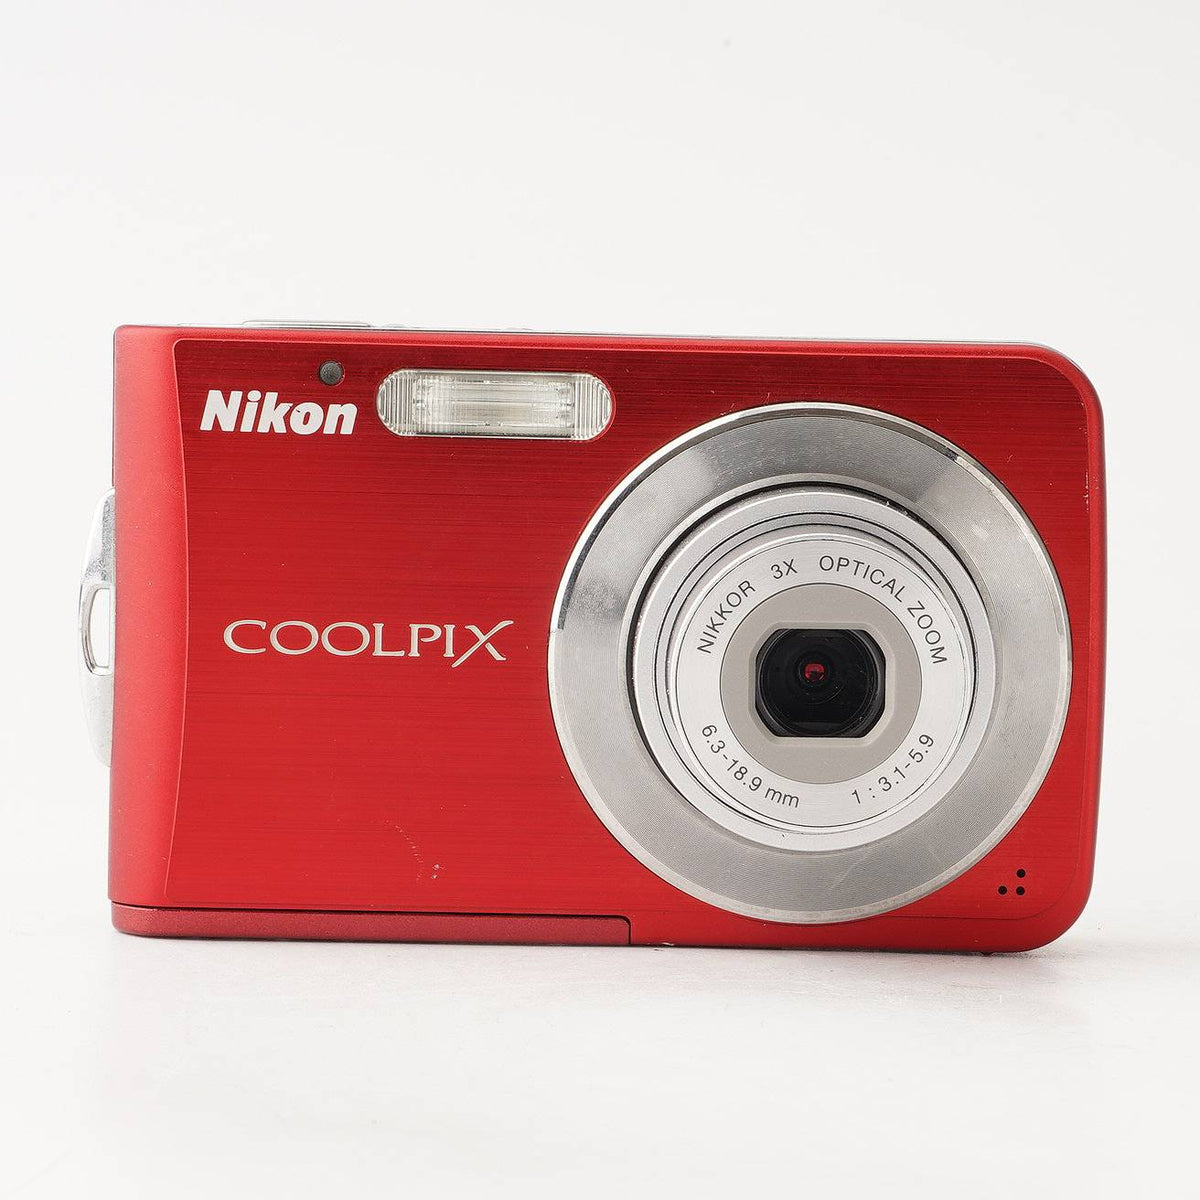 Nikon ニコン COOLPIX S203 【日本未発売】 - デジタルカメラ